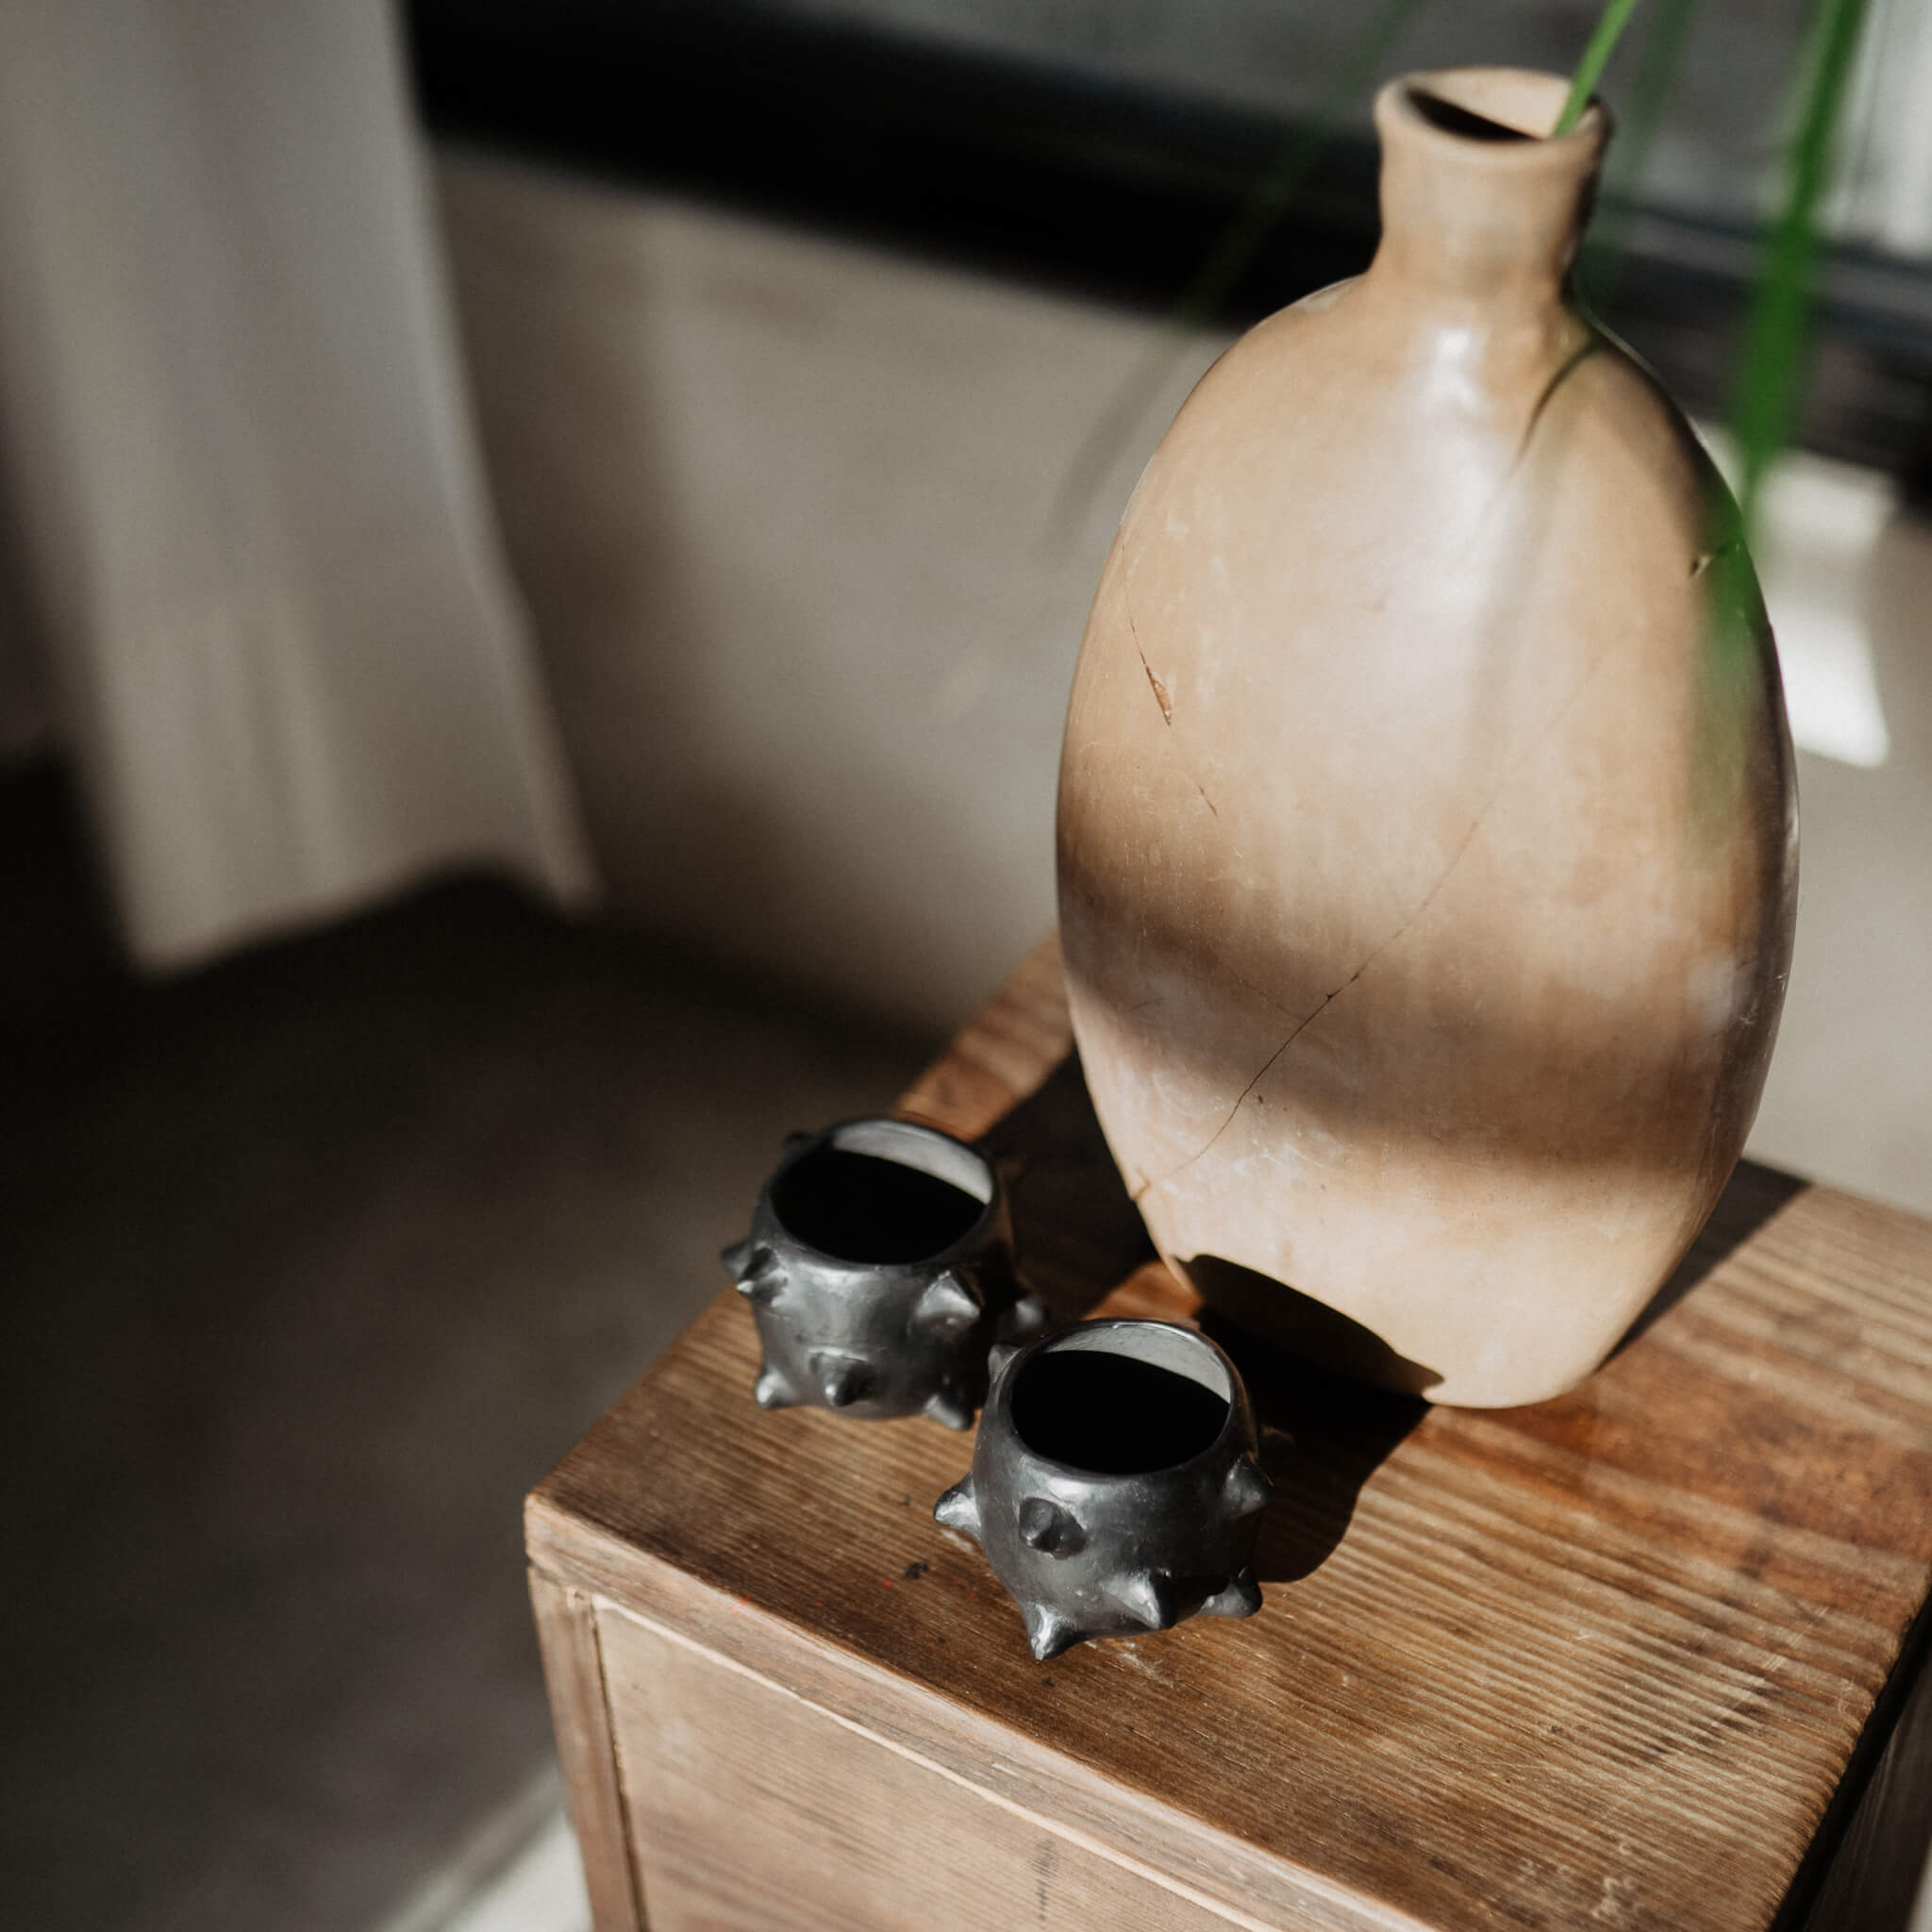 Black clay mezcal copitas next to a vase.